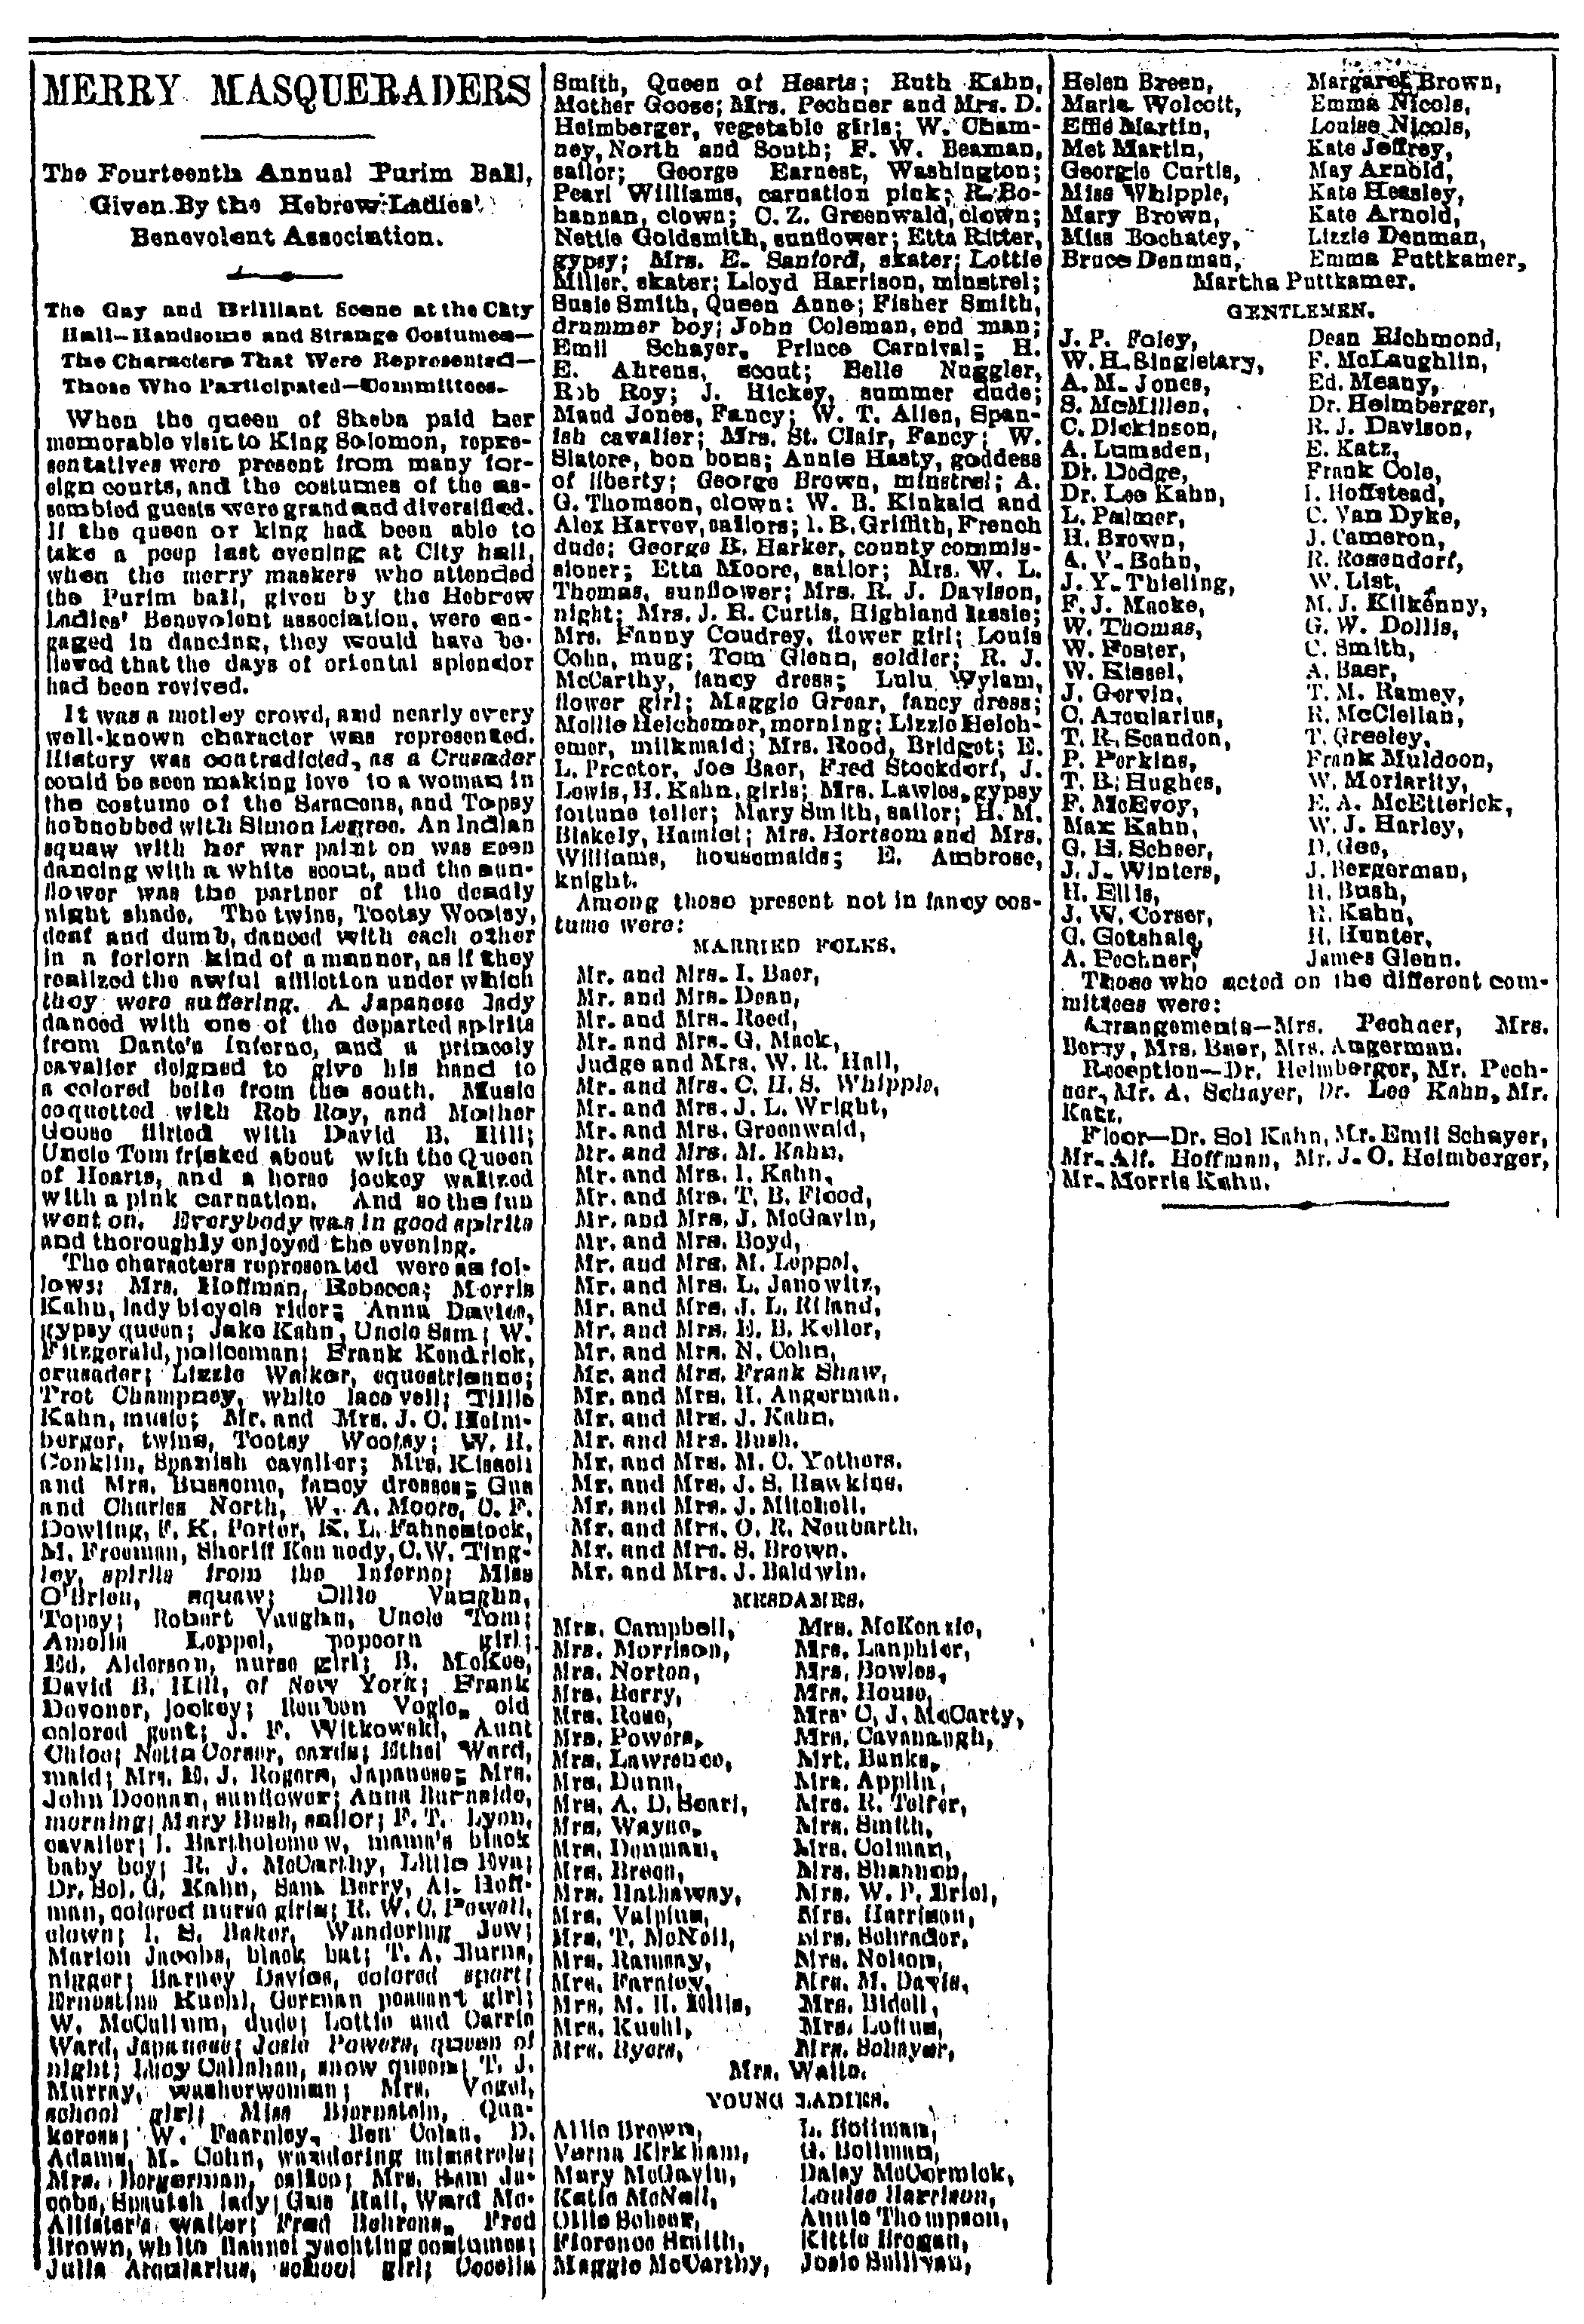 The Herald Democrat. Friday, February 26, 1892.